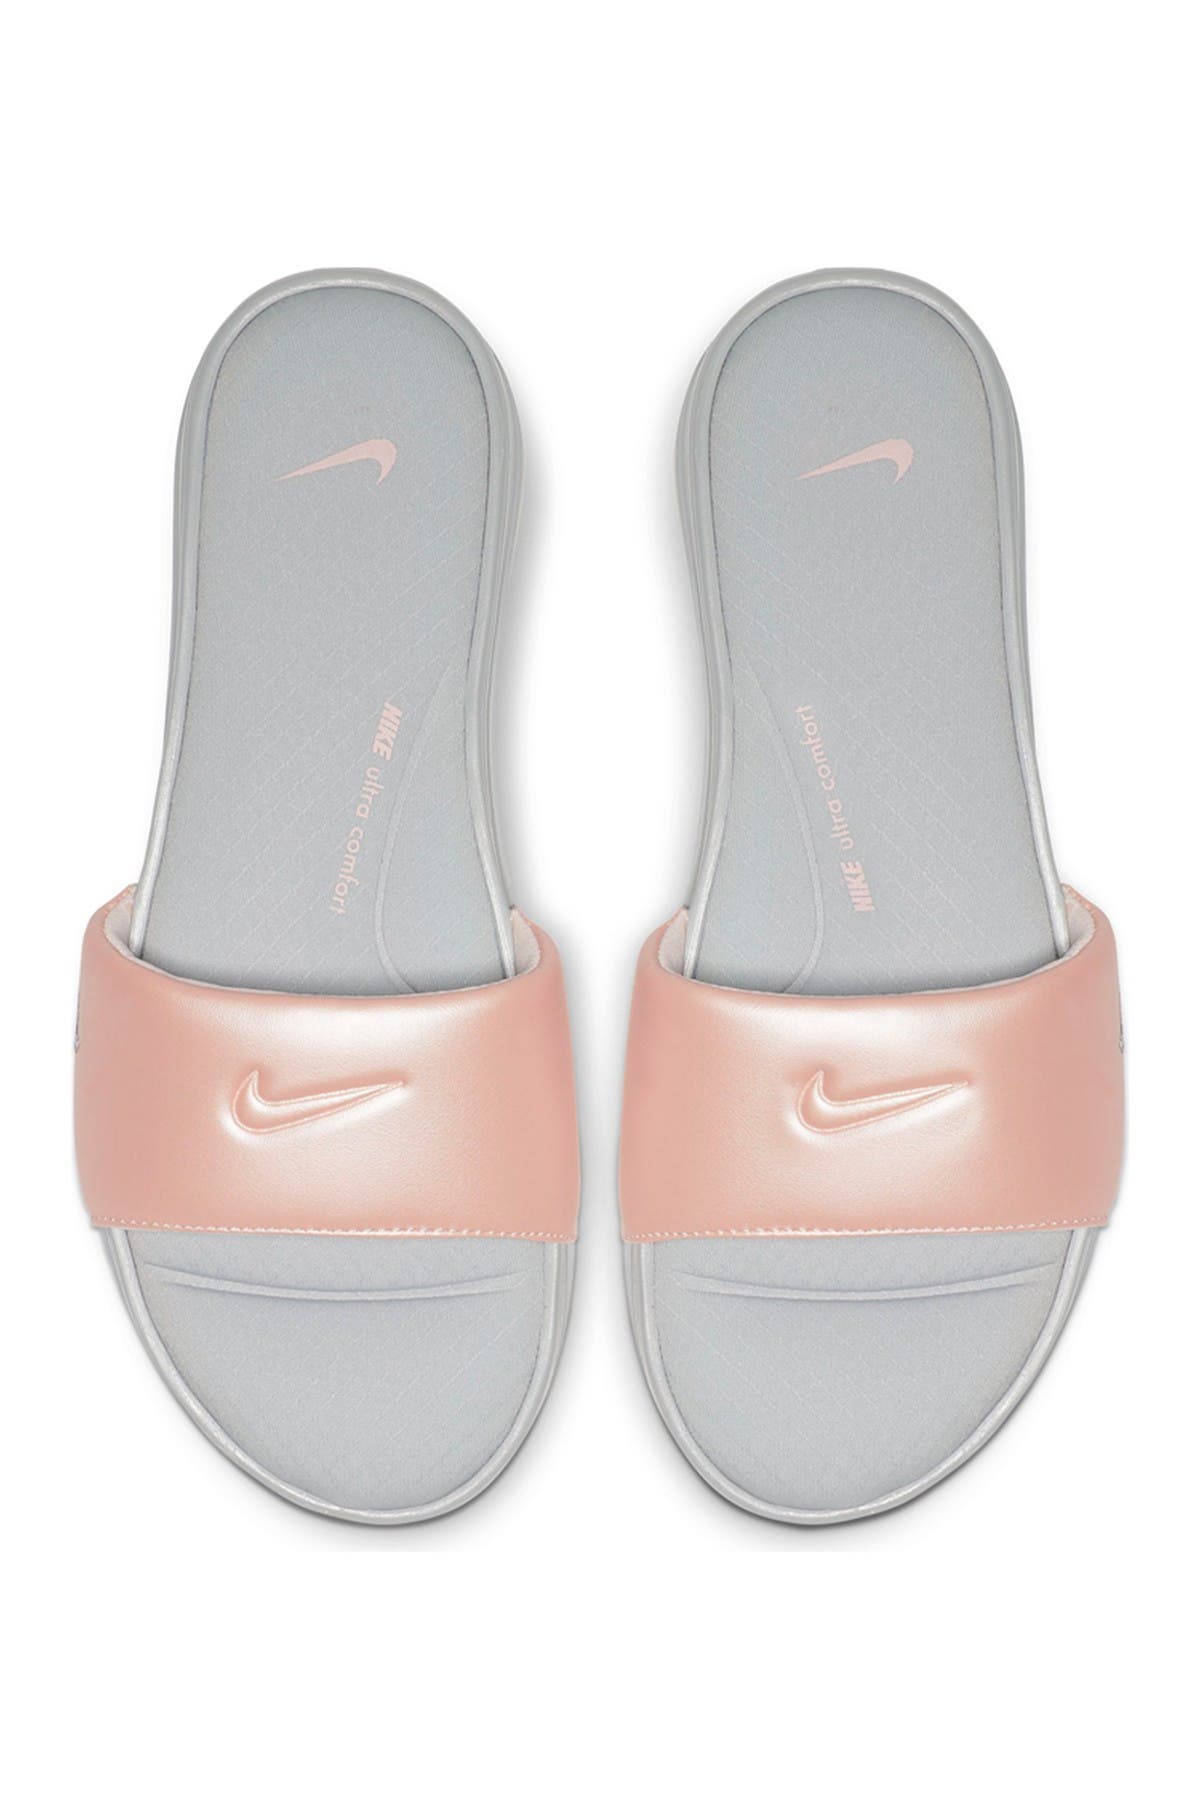 nike ultra comfort 3 women's slide sandals